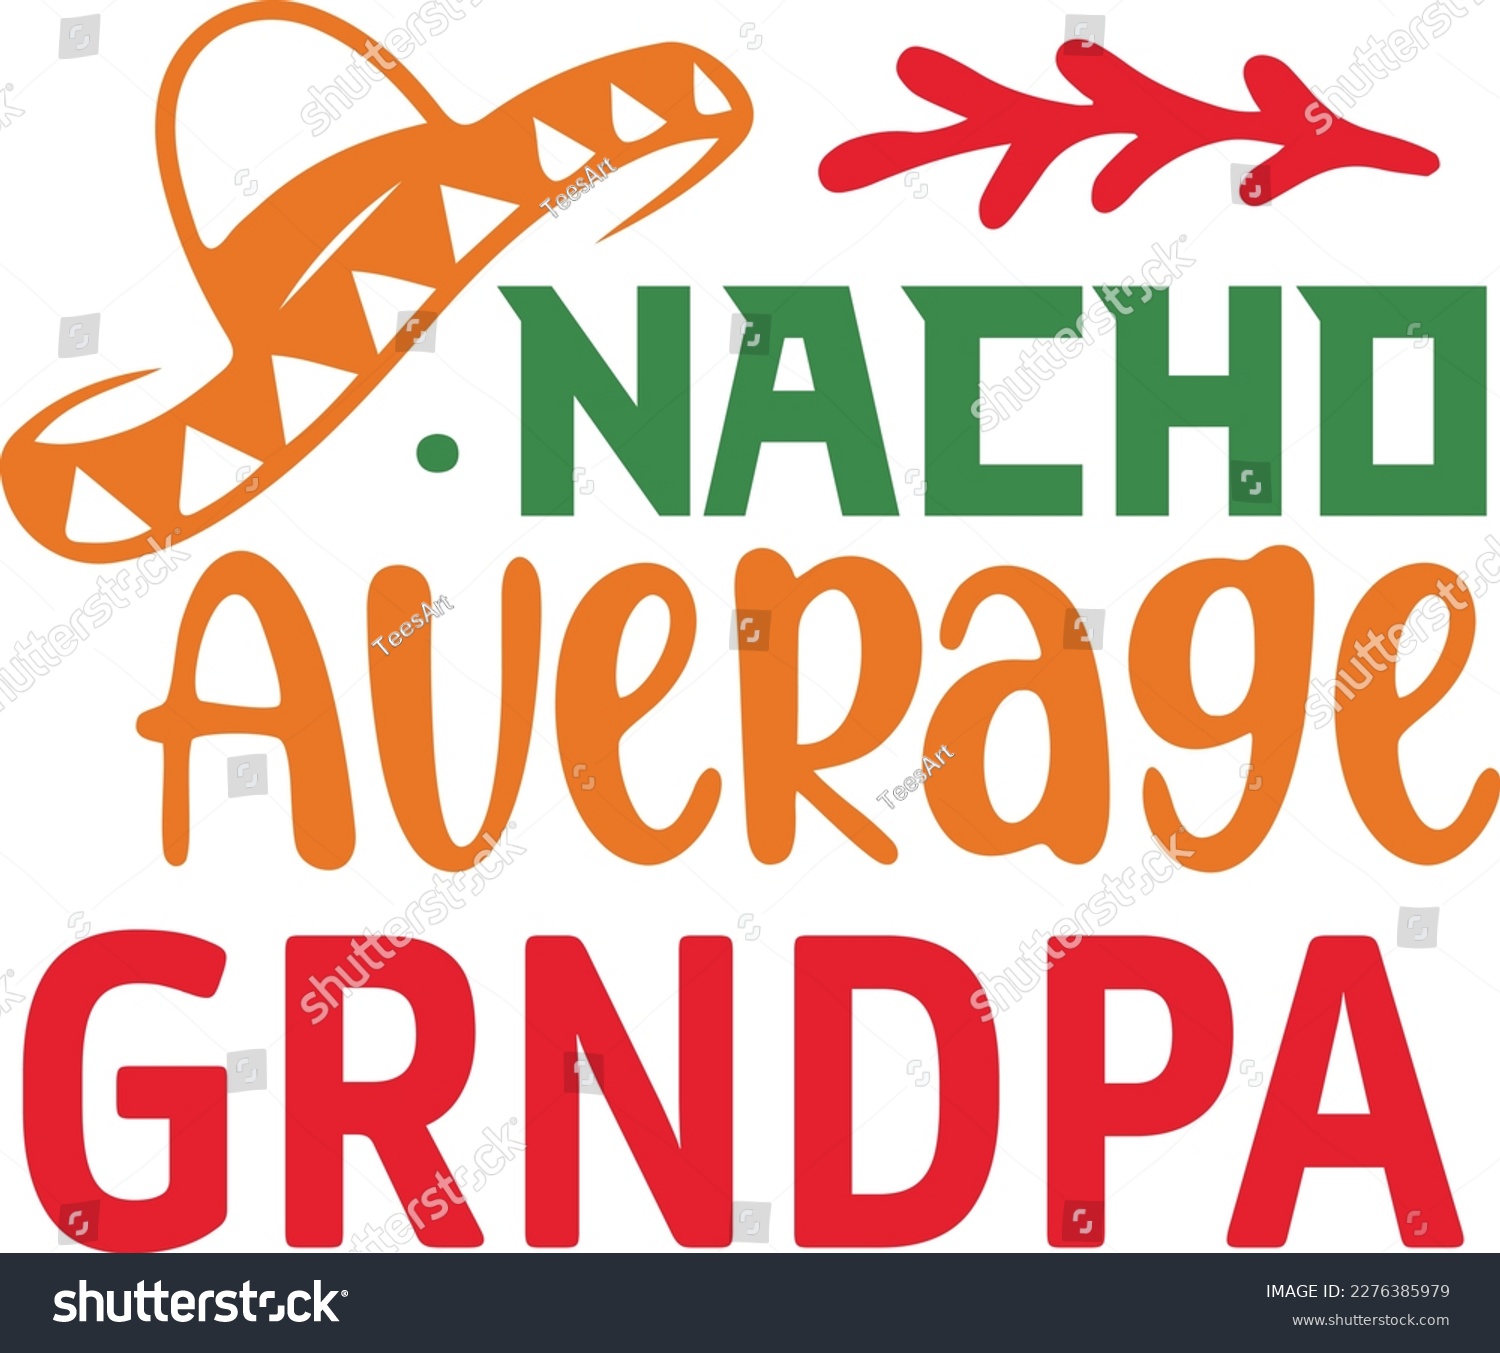 SVG of Nacho Average grandpa cinco de mayo svg,Cinco de mayoo designs, nacho average svg deisgn svg